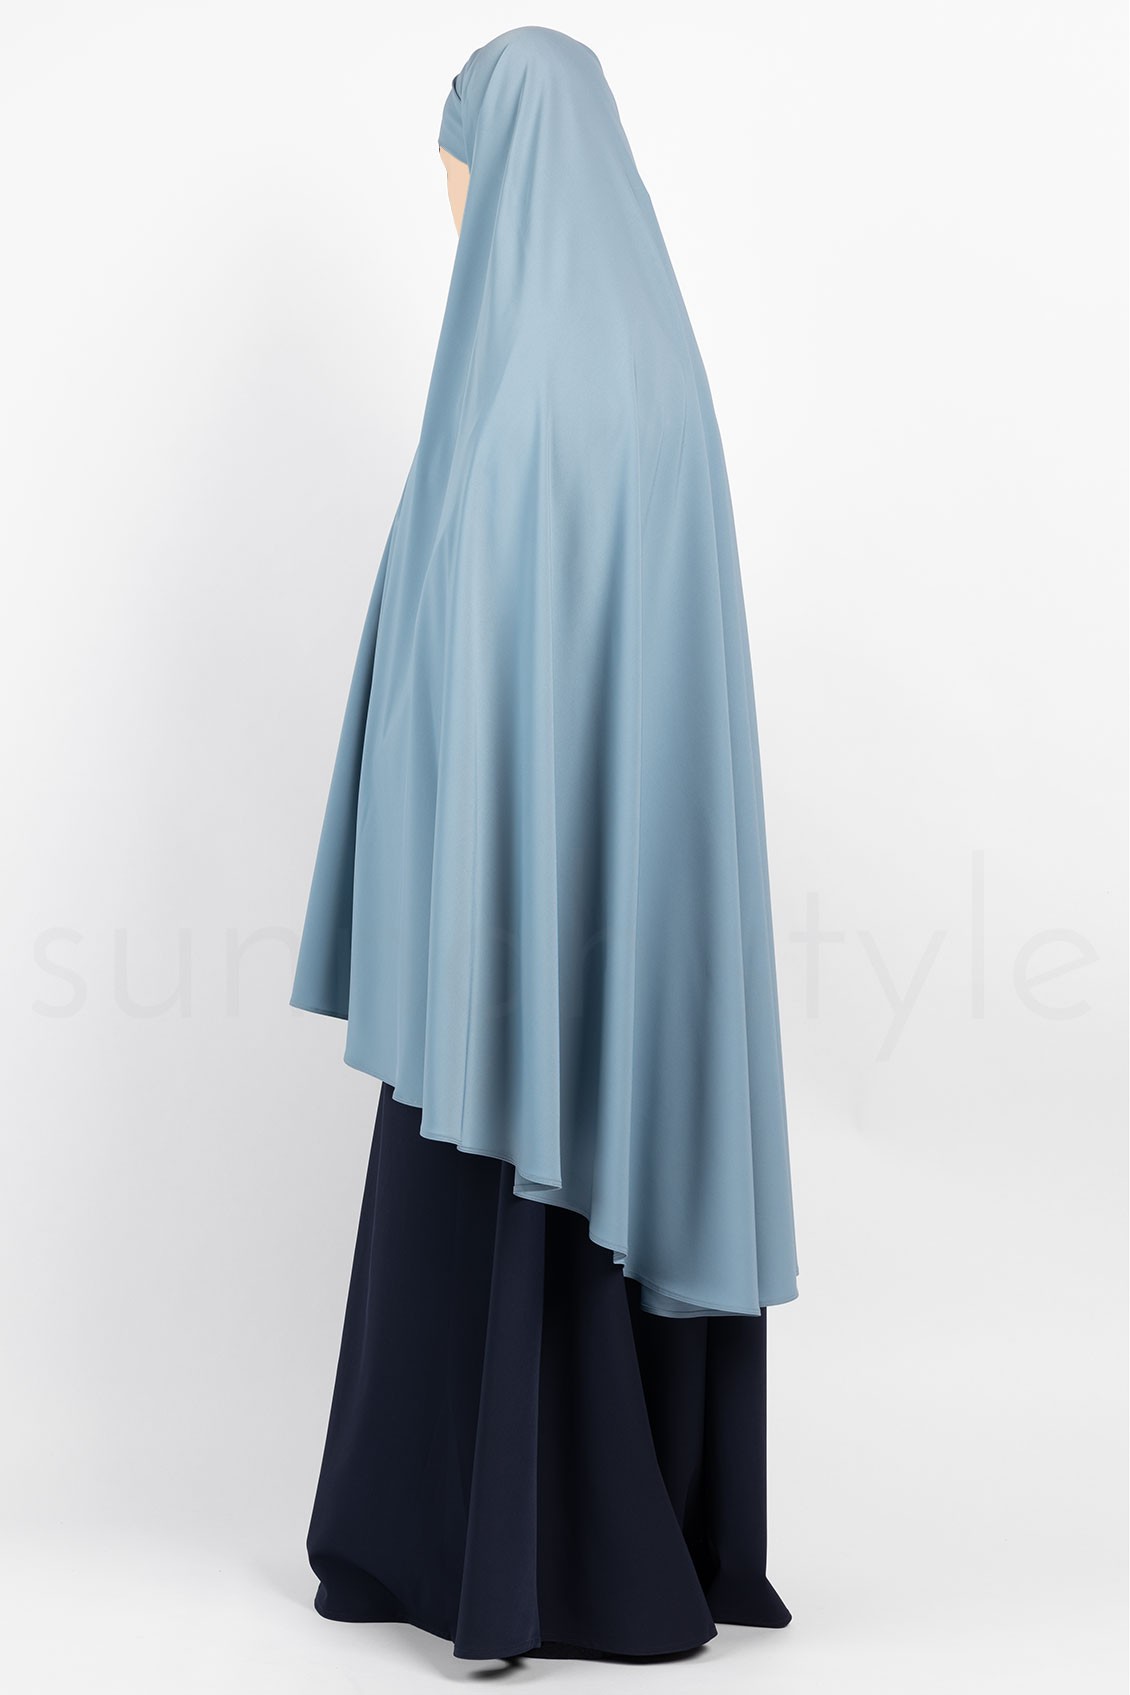 Sunnah Style Essentials Tie-Back Khimar Knee Length Powder